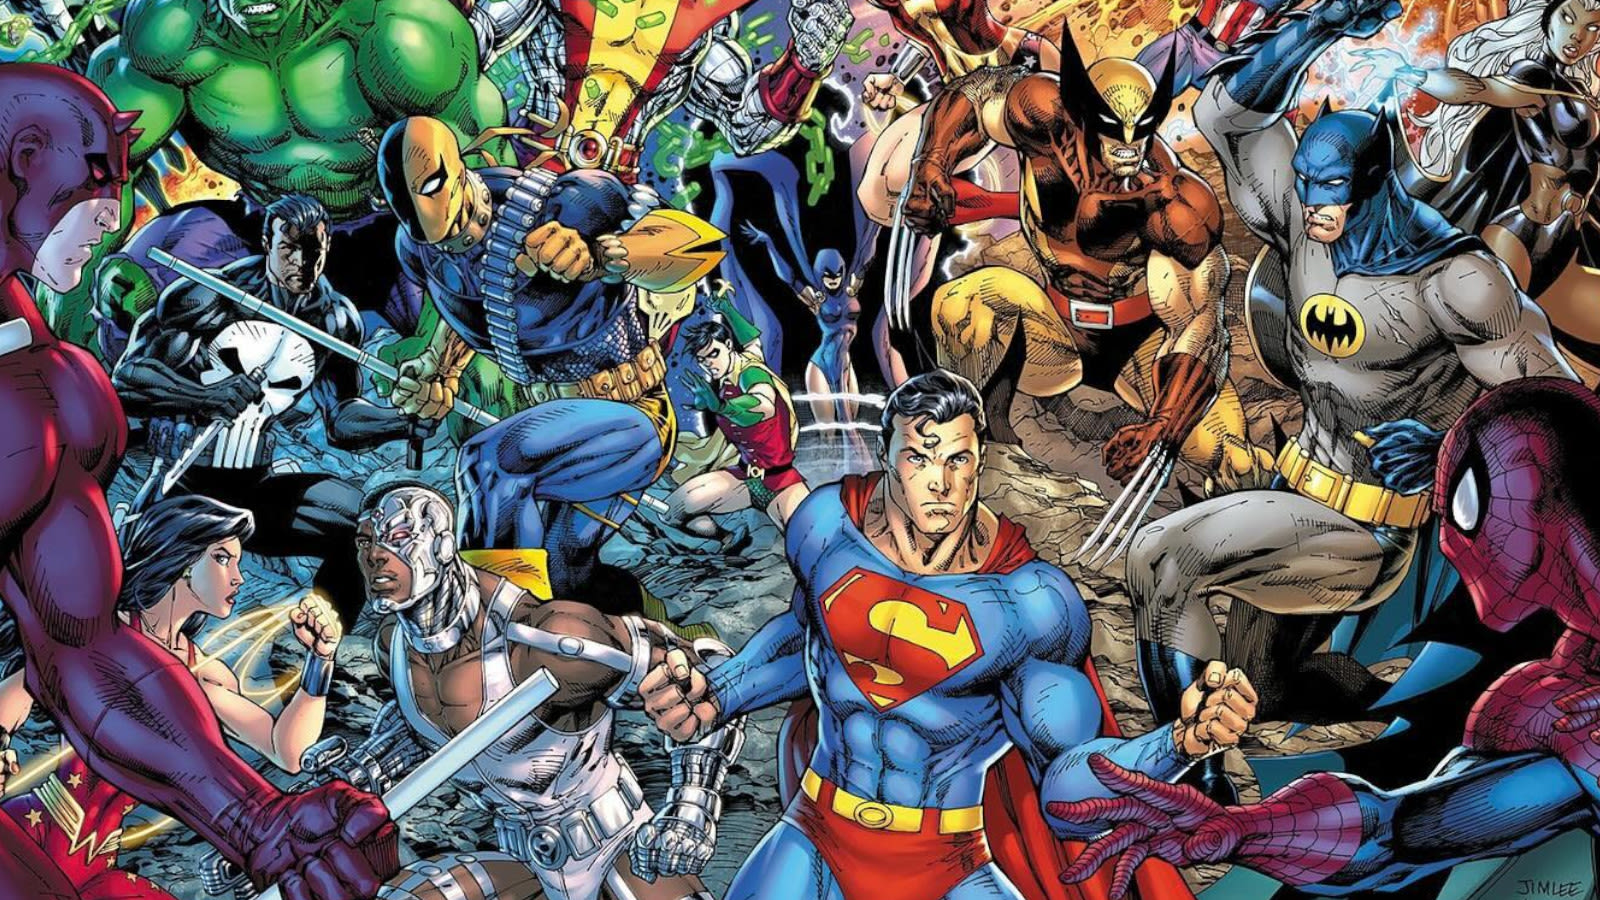 Legendary X-Men artist Jim Lee reveals first new Marvel work since ’90s - Dexerto